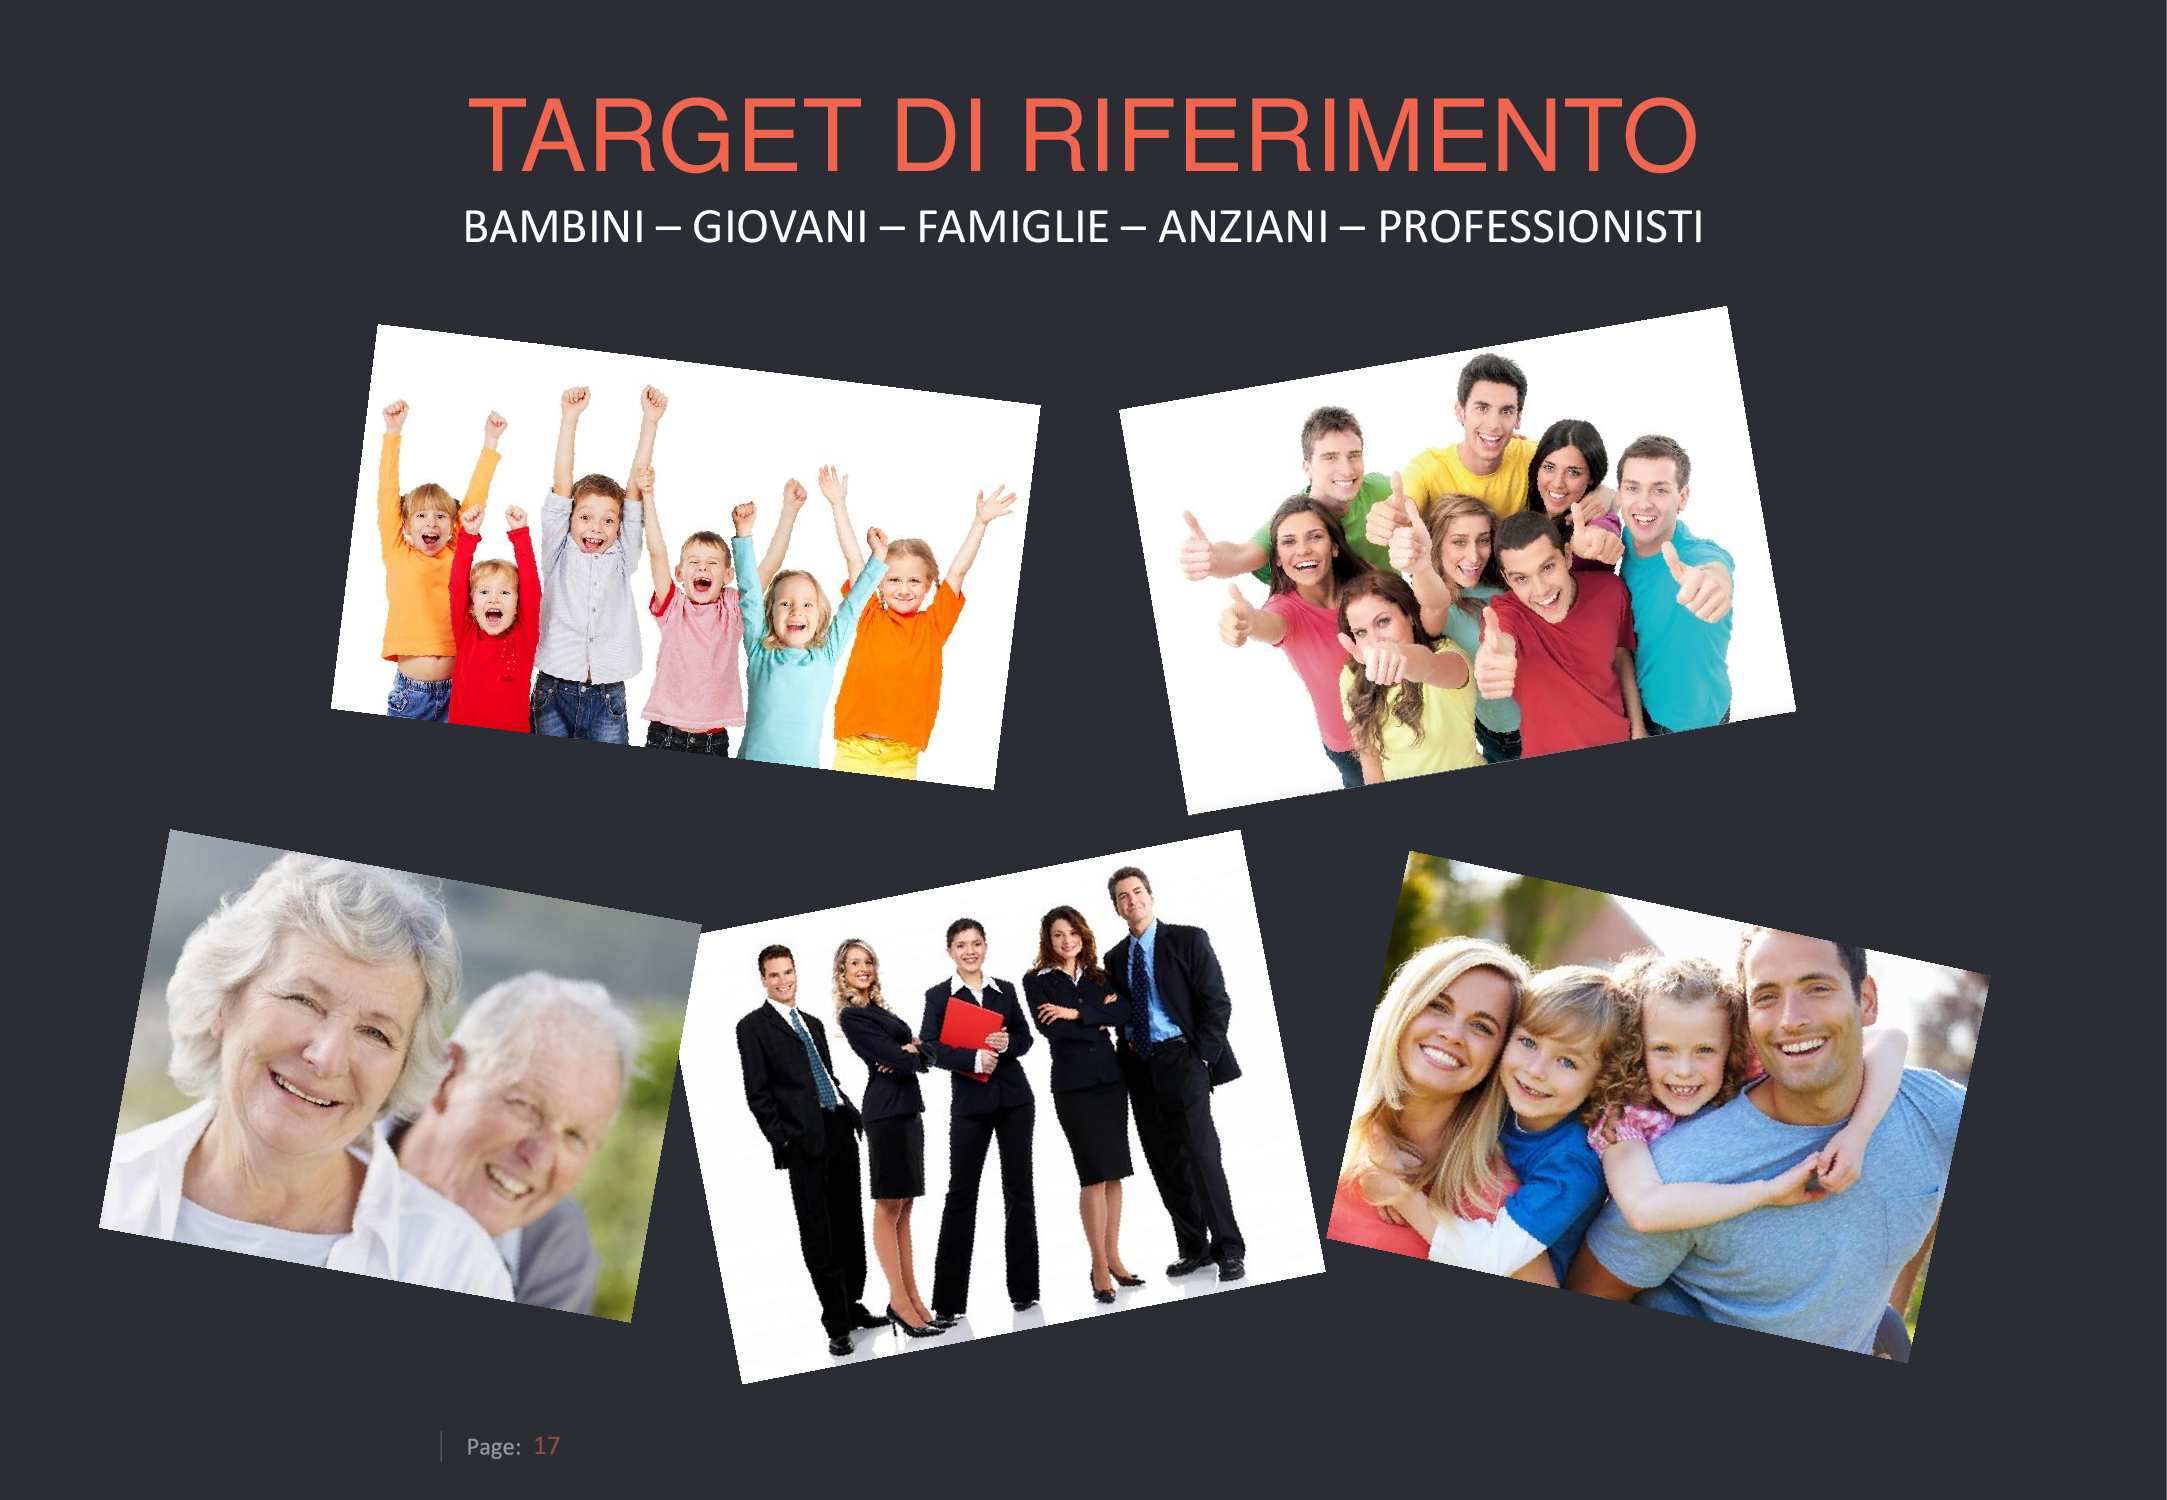 Barrett International Group - Target di riferimento